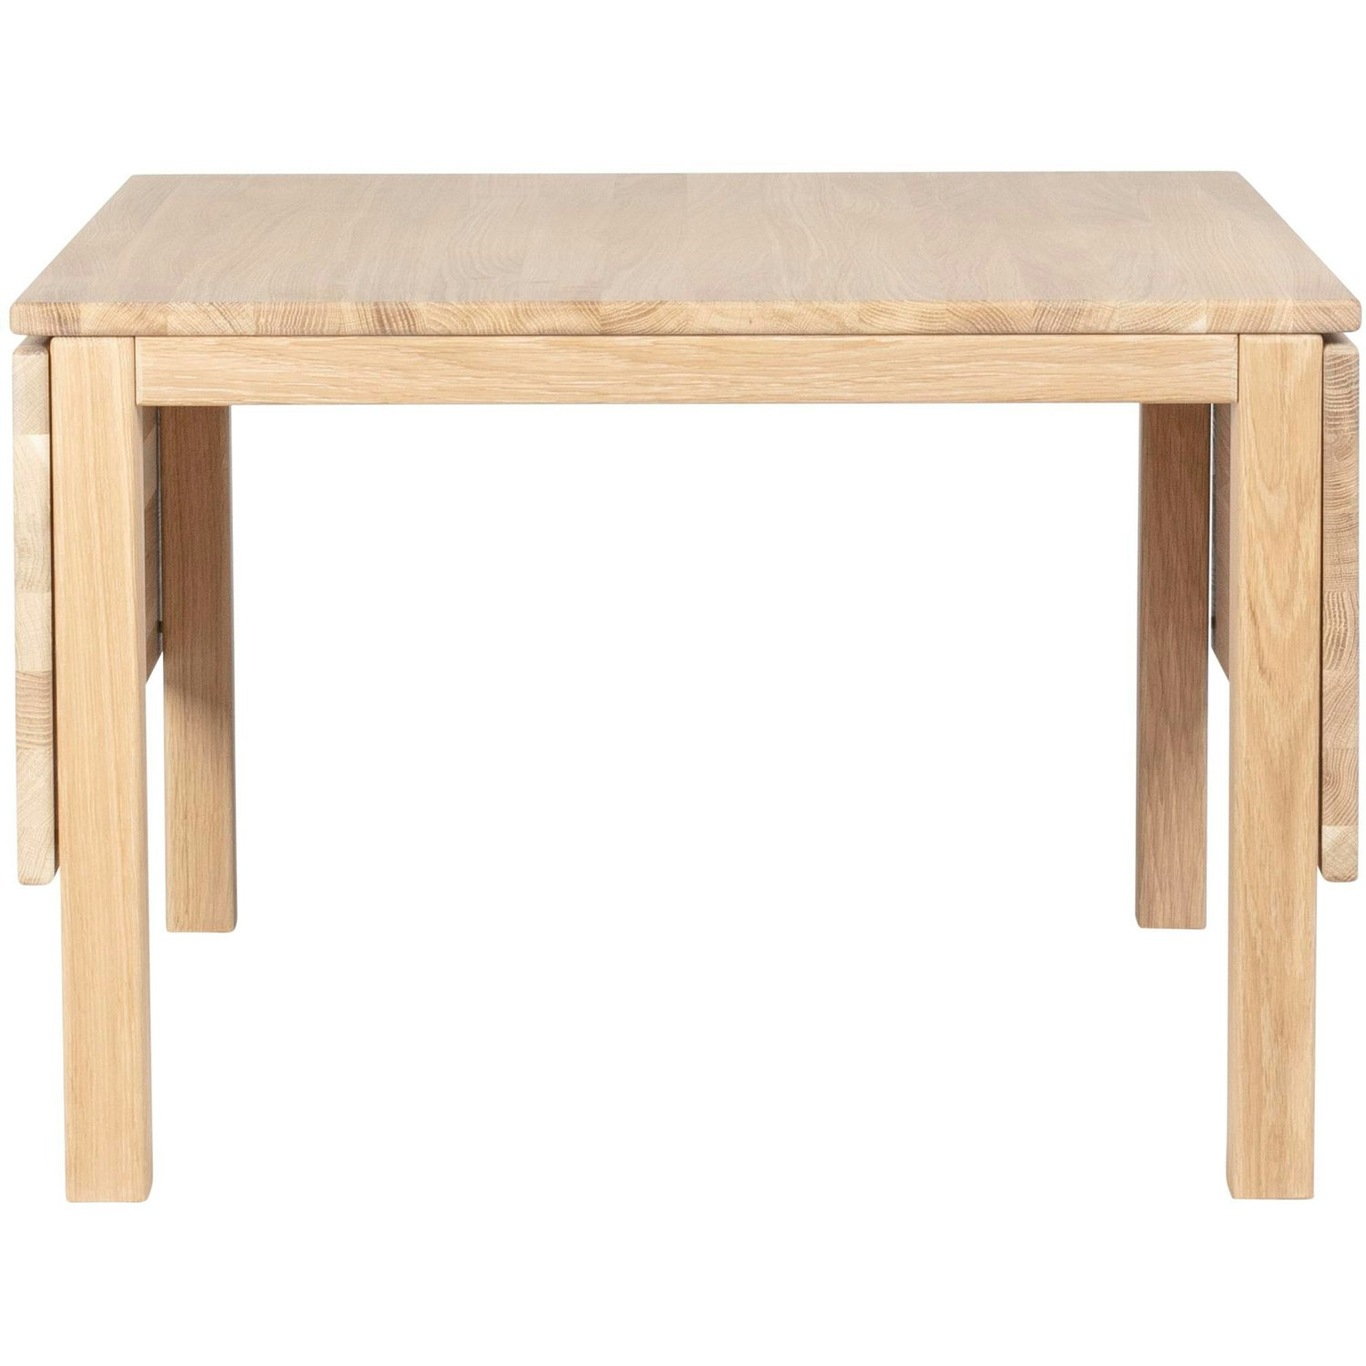 Klassik 3E Coffee Table With Drop-Leaves, 75x75 cm, White Oiled Oak